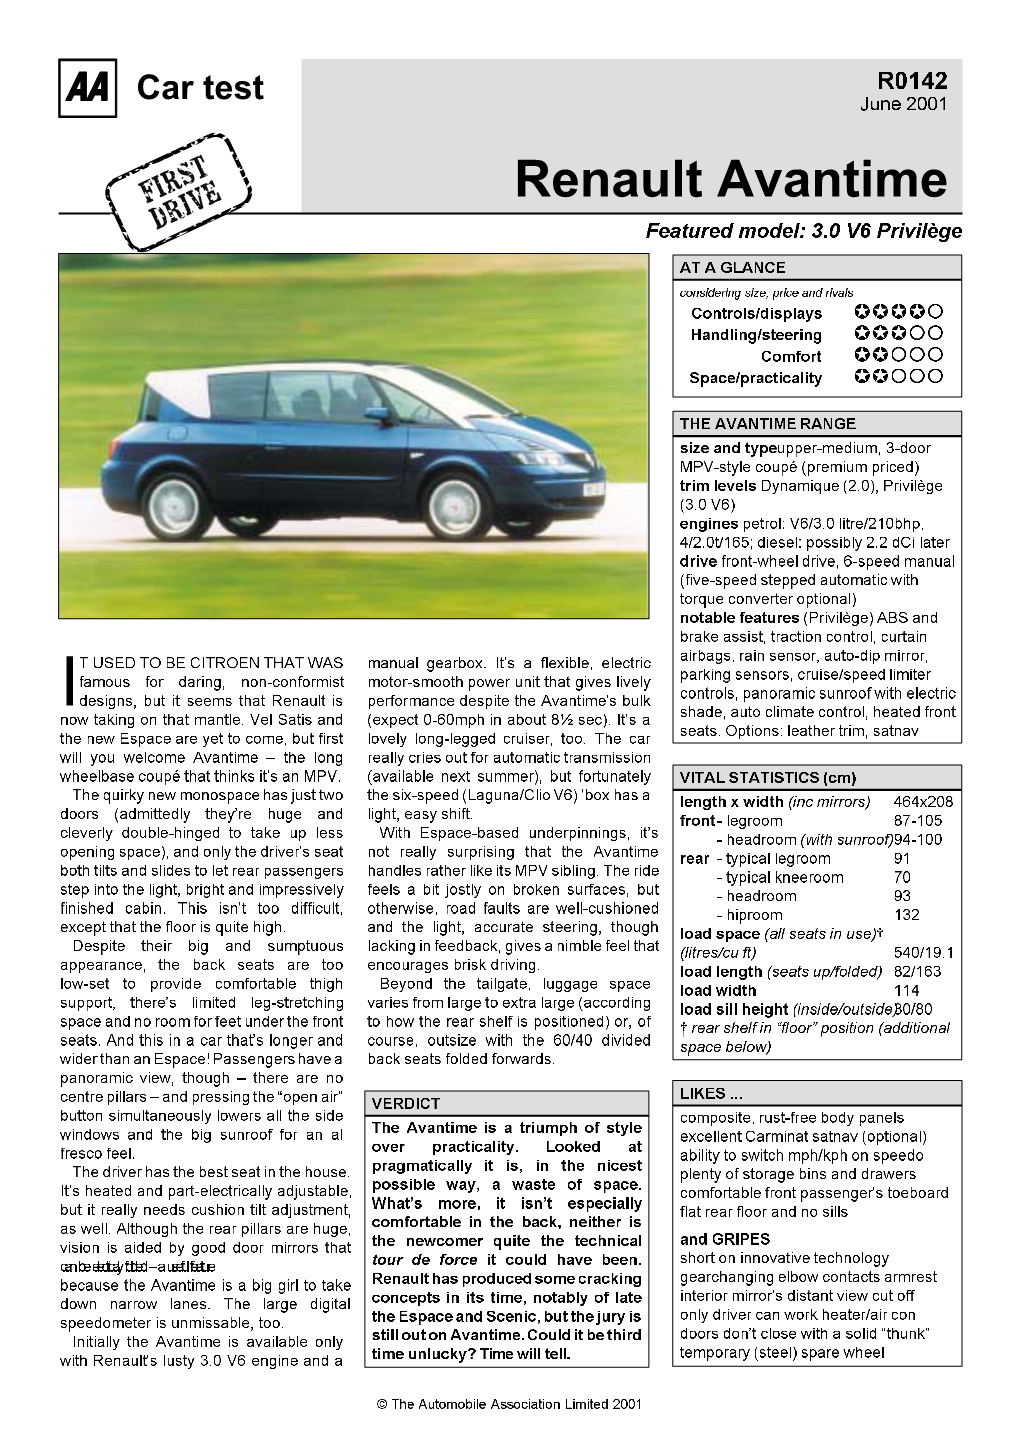 Renault Avantime DRIVE Featured Model: 3.0 V6 Privilège